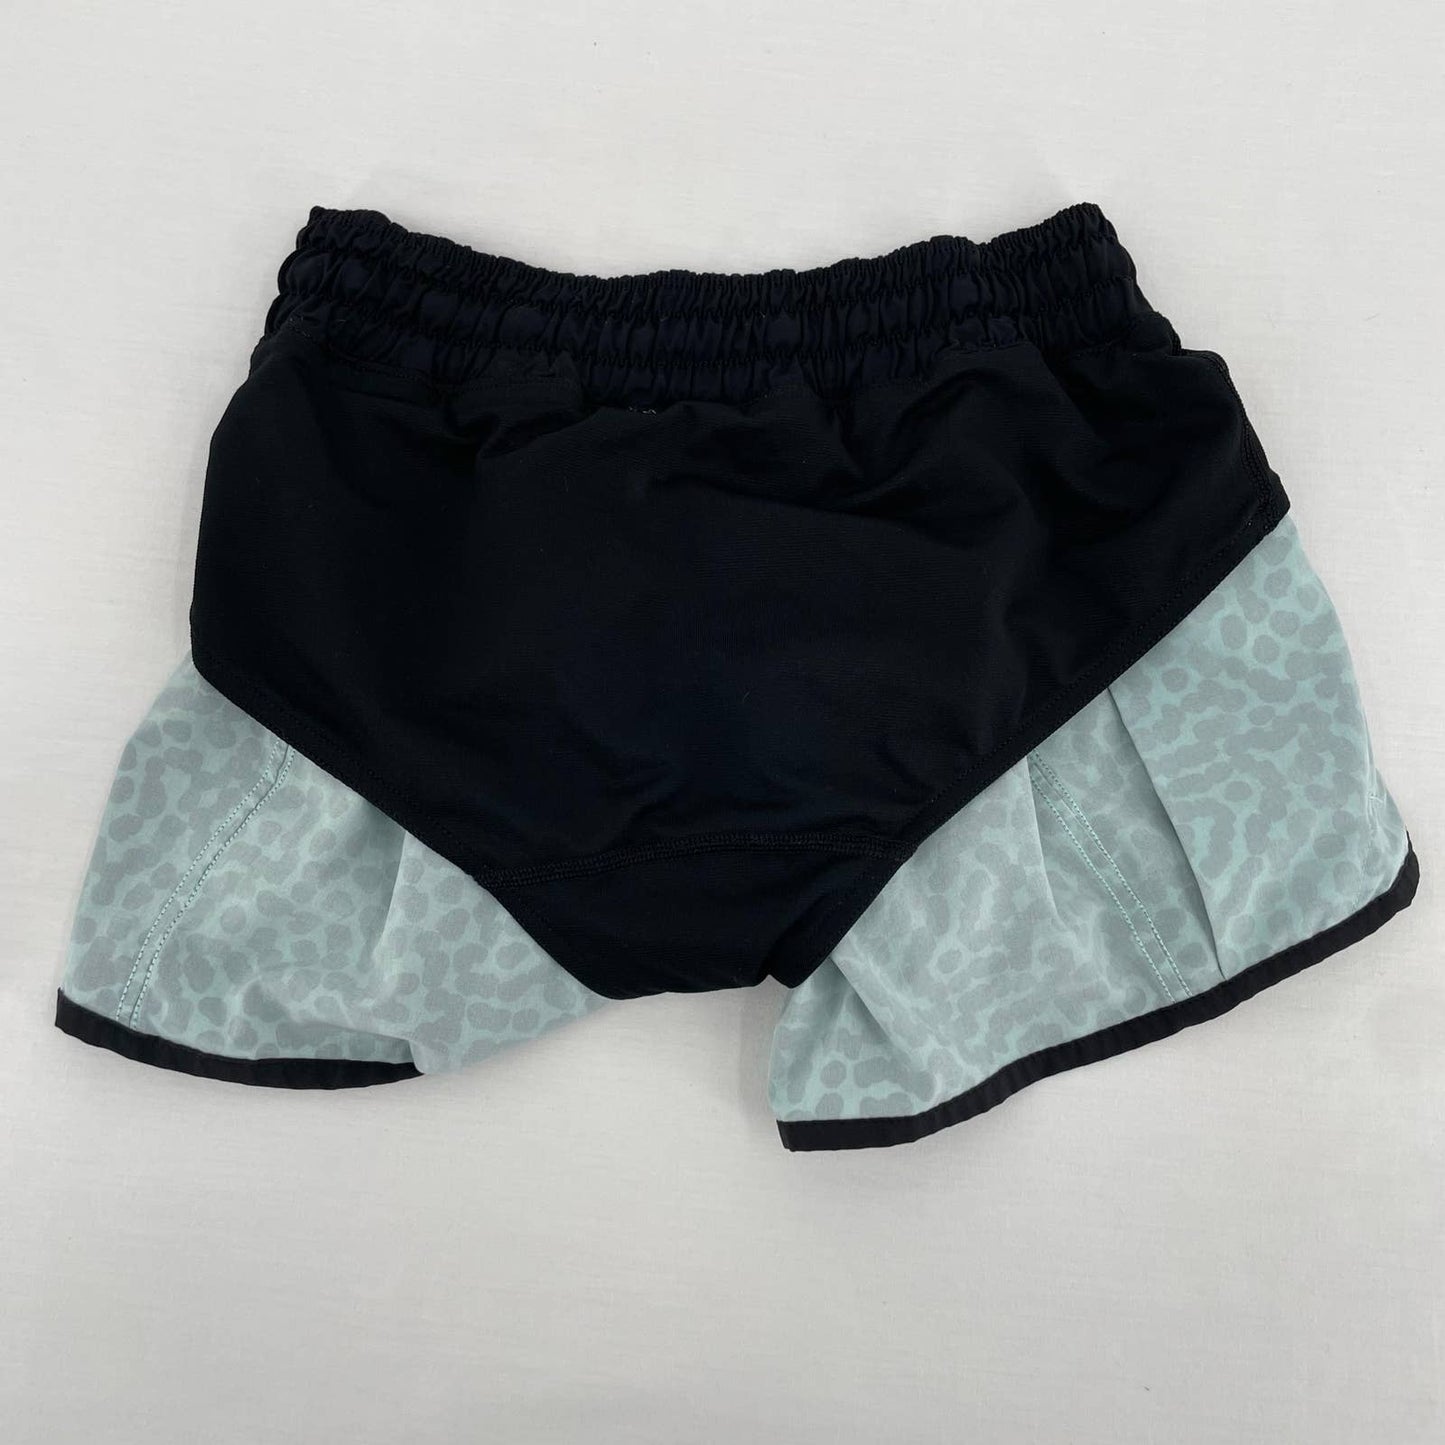 Lululemon Tracker Short III Ace Spot Tranquil Blue Black Running Active Shorts Size 6